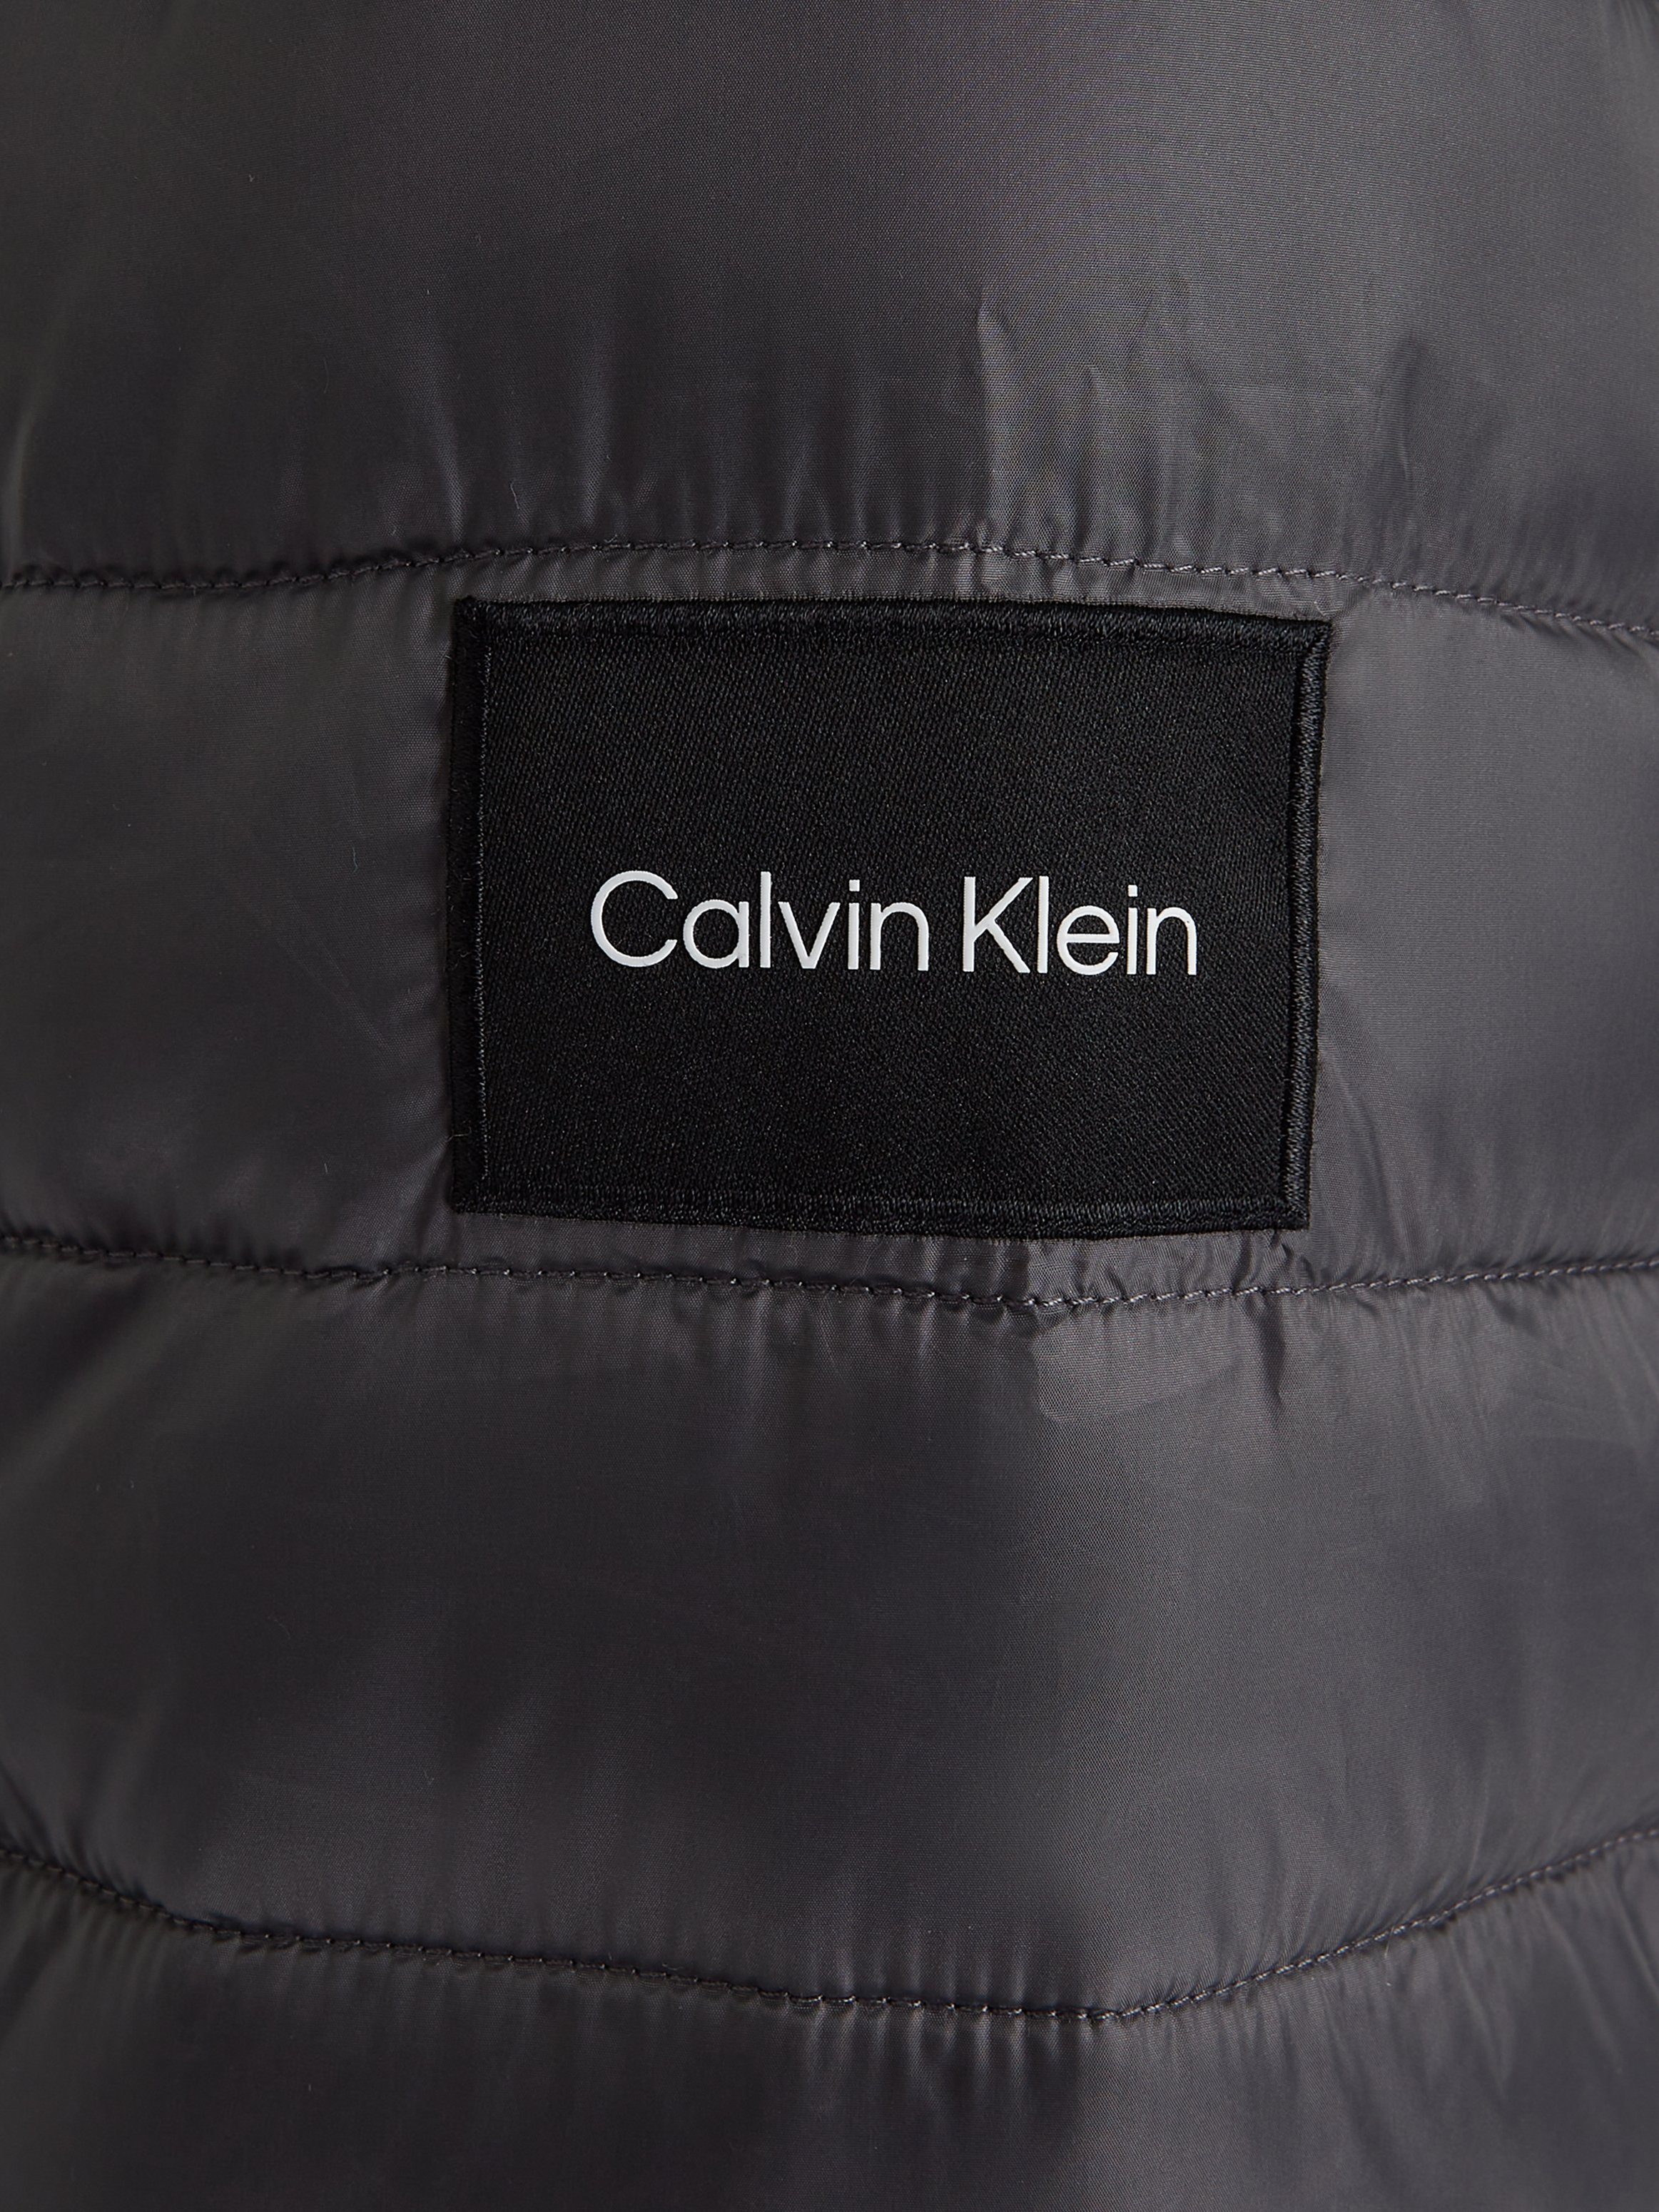 Calvin Klein Steppjacke mit JACKET SIDE Markenlabel RECYCLED LOGO Magnet